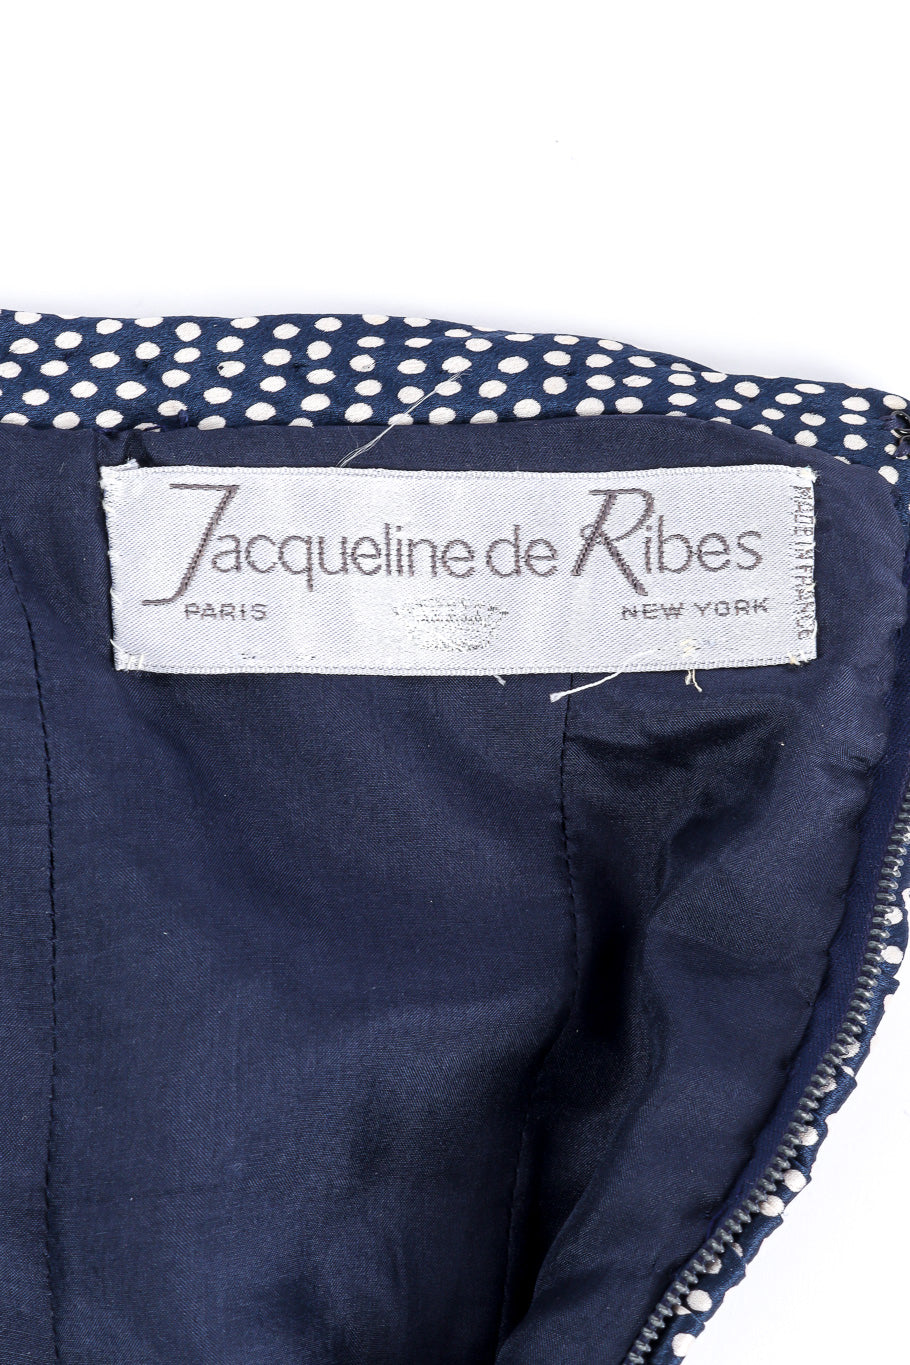 Jaqueline de Ribes polka dot dress with shawl designer label @recessla